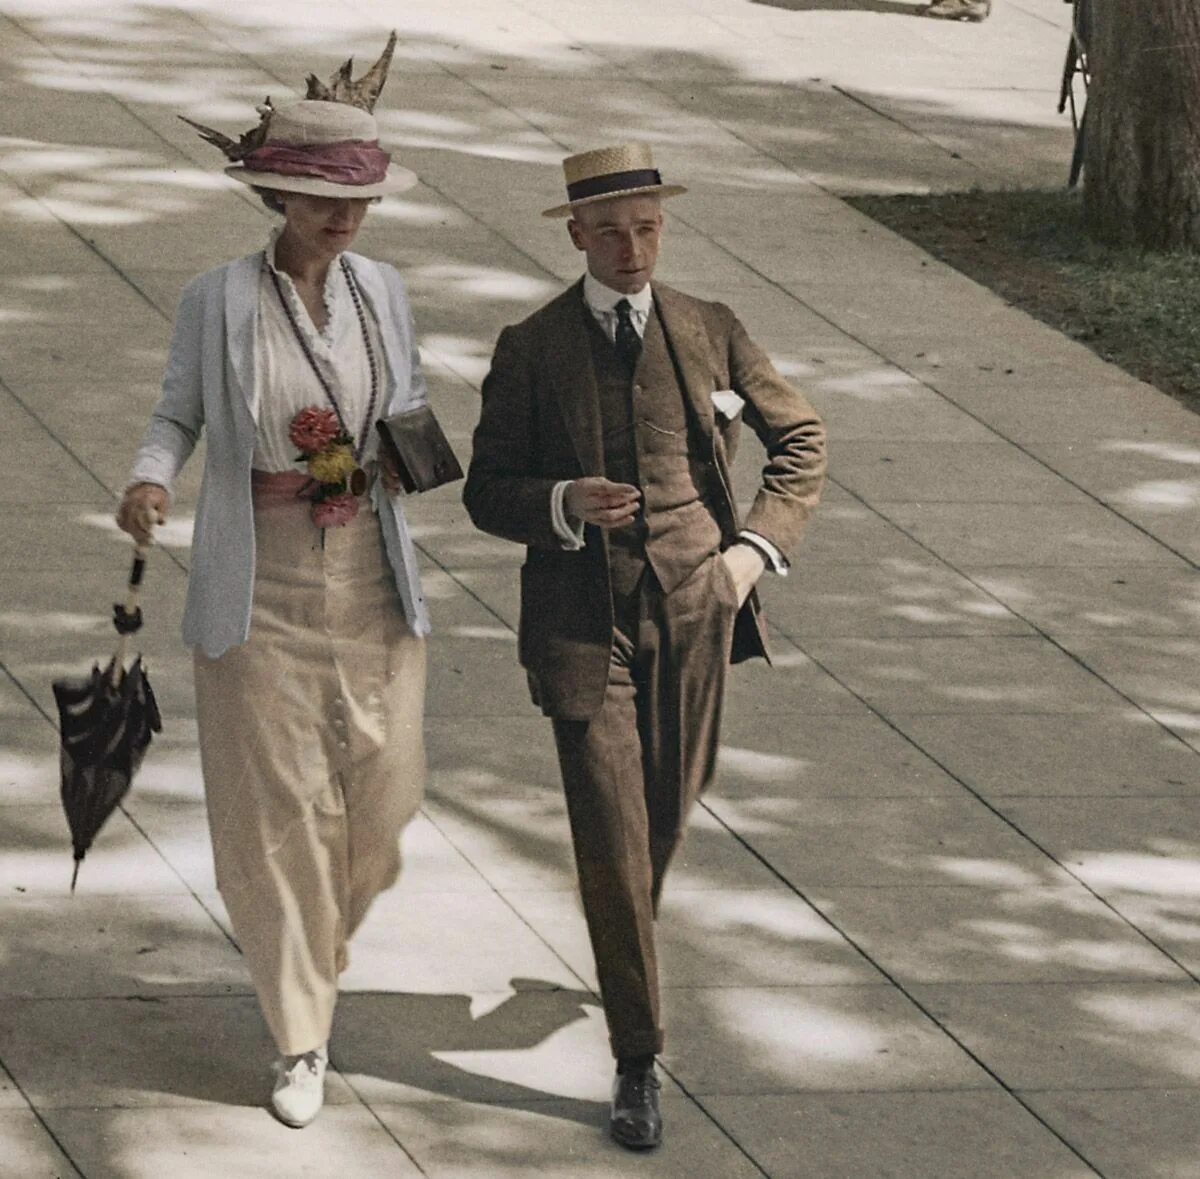 Хх мен. Мода Эдвардианская эпоха 1915. Мода 1900х в Америке. Мода 1910 Англия. Мода 1900 Англия.